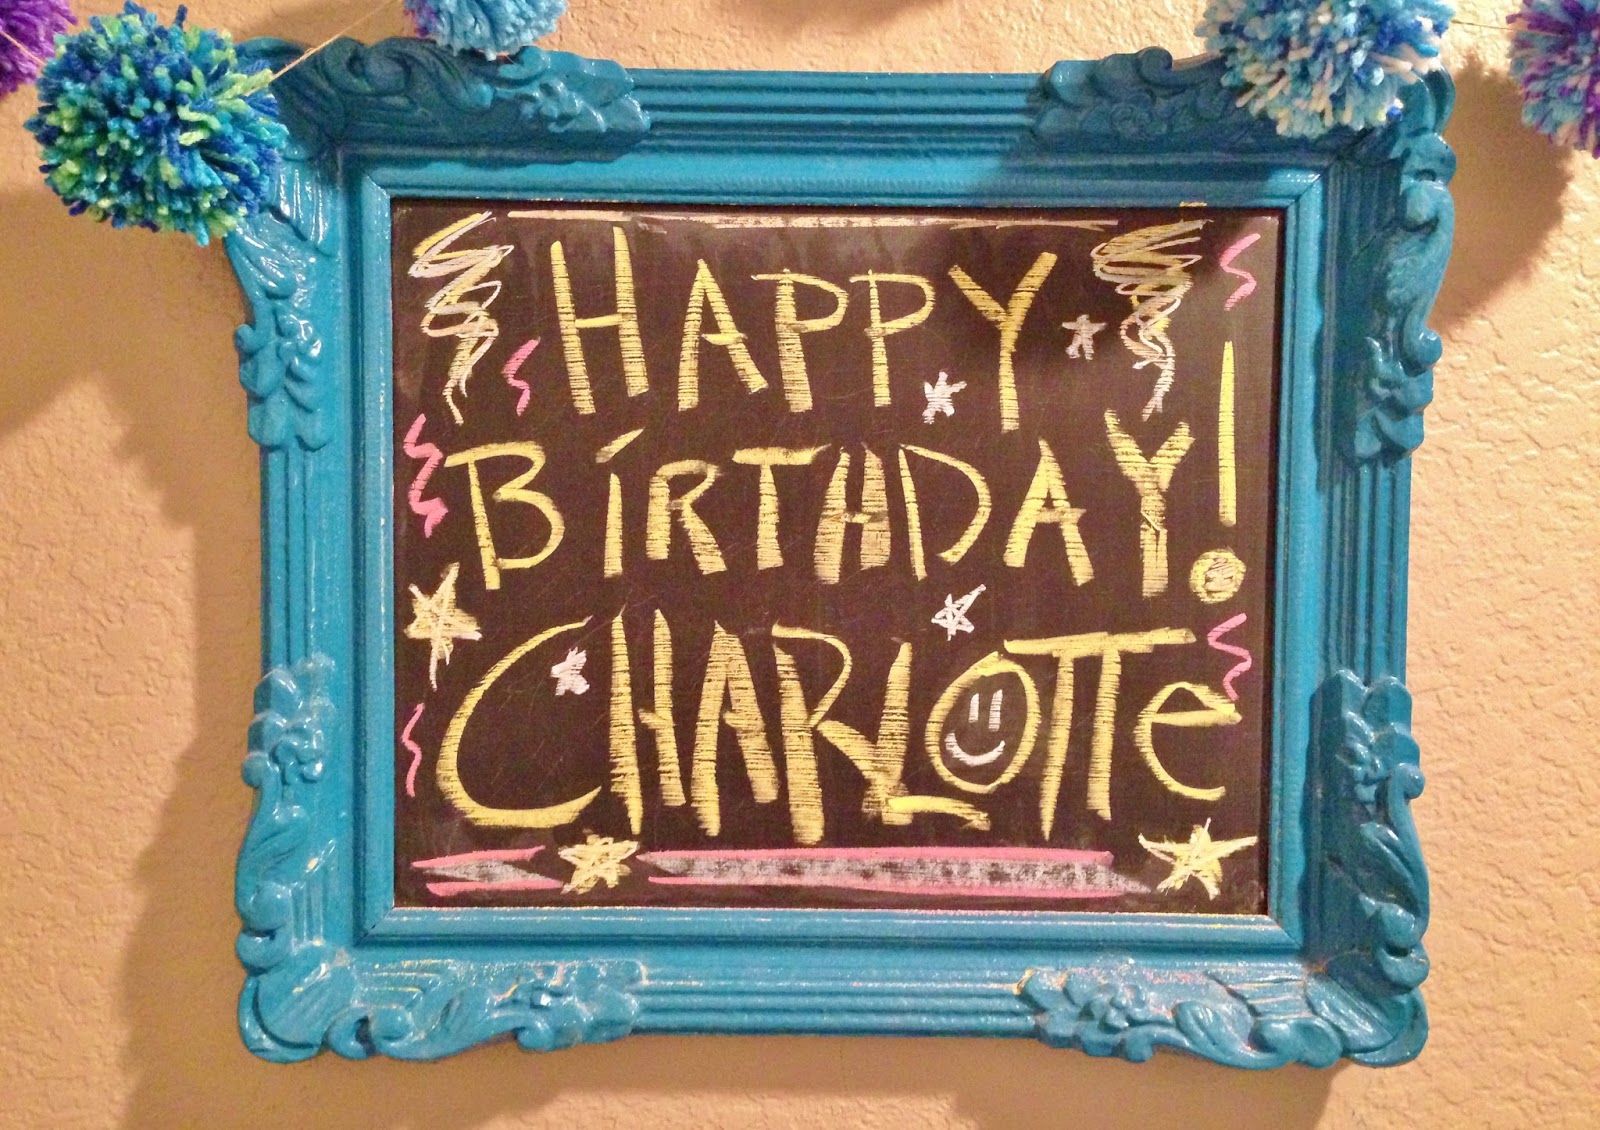 planet clare: Happy Birthday Charlotte!